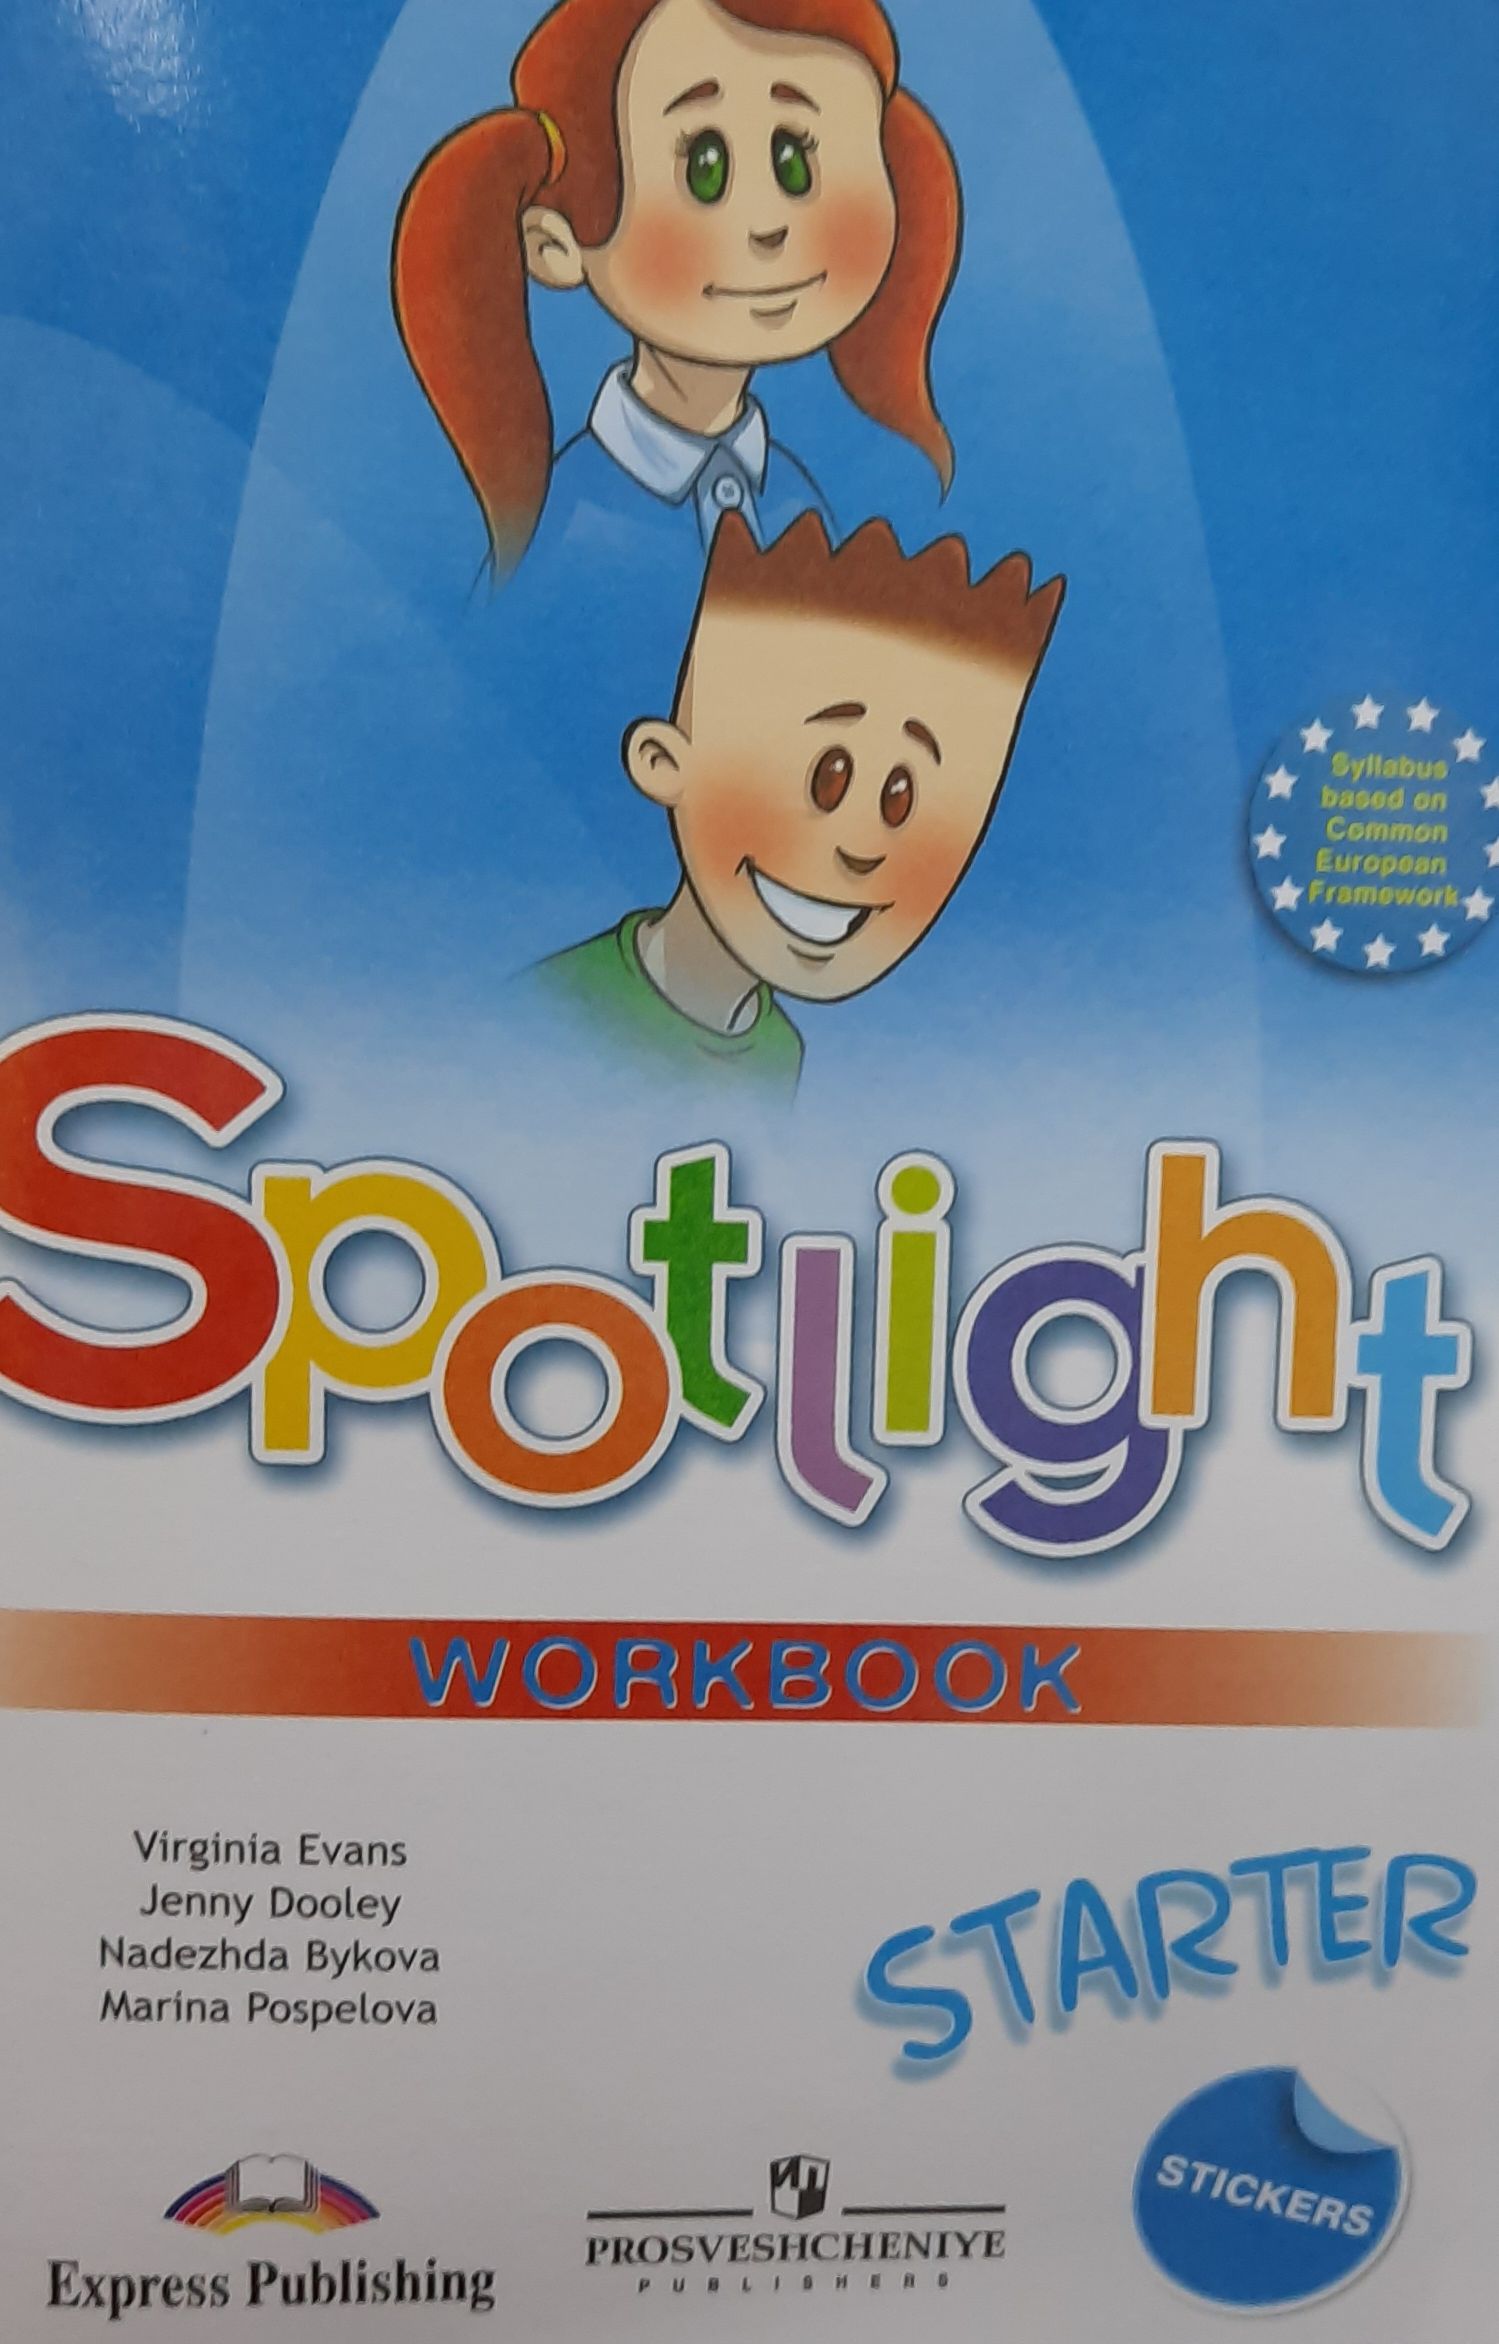 Тета по англ. Spotlight Starter. Spotlight Starter Flashcards. Спотлайт стартер картинки. Мальчик саммит Spotlight Starter на английском.